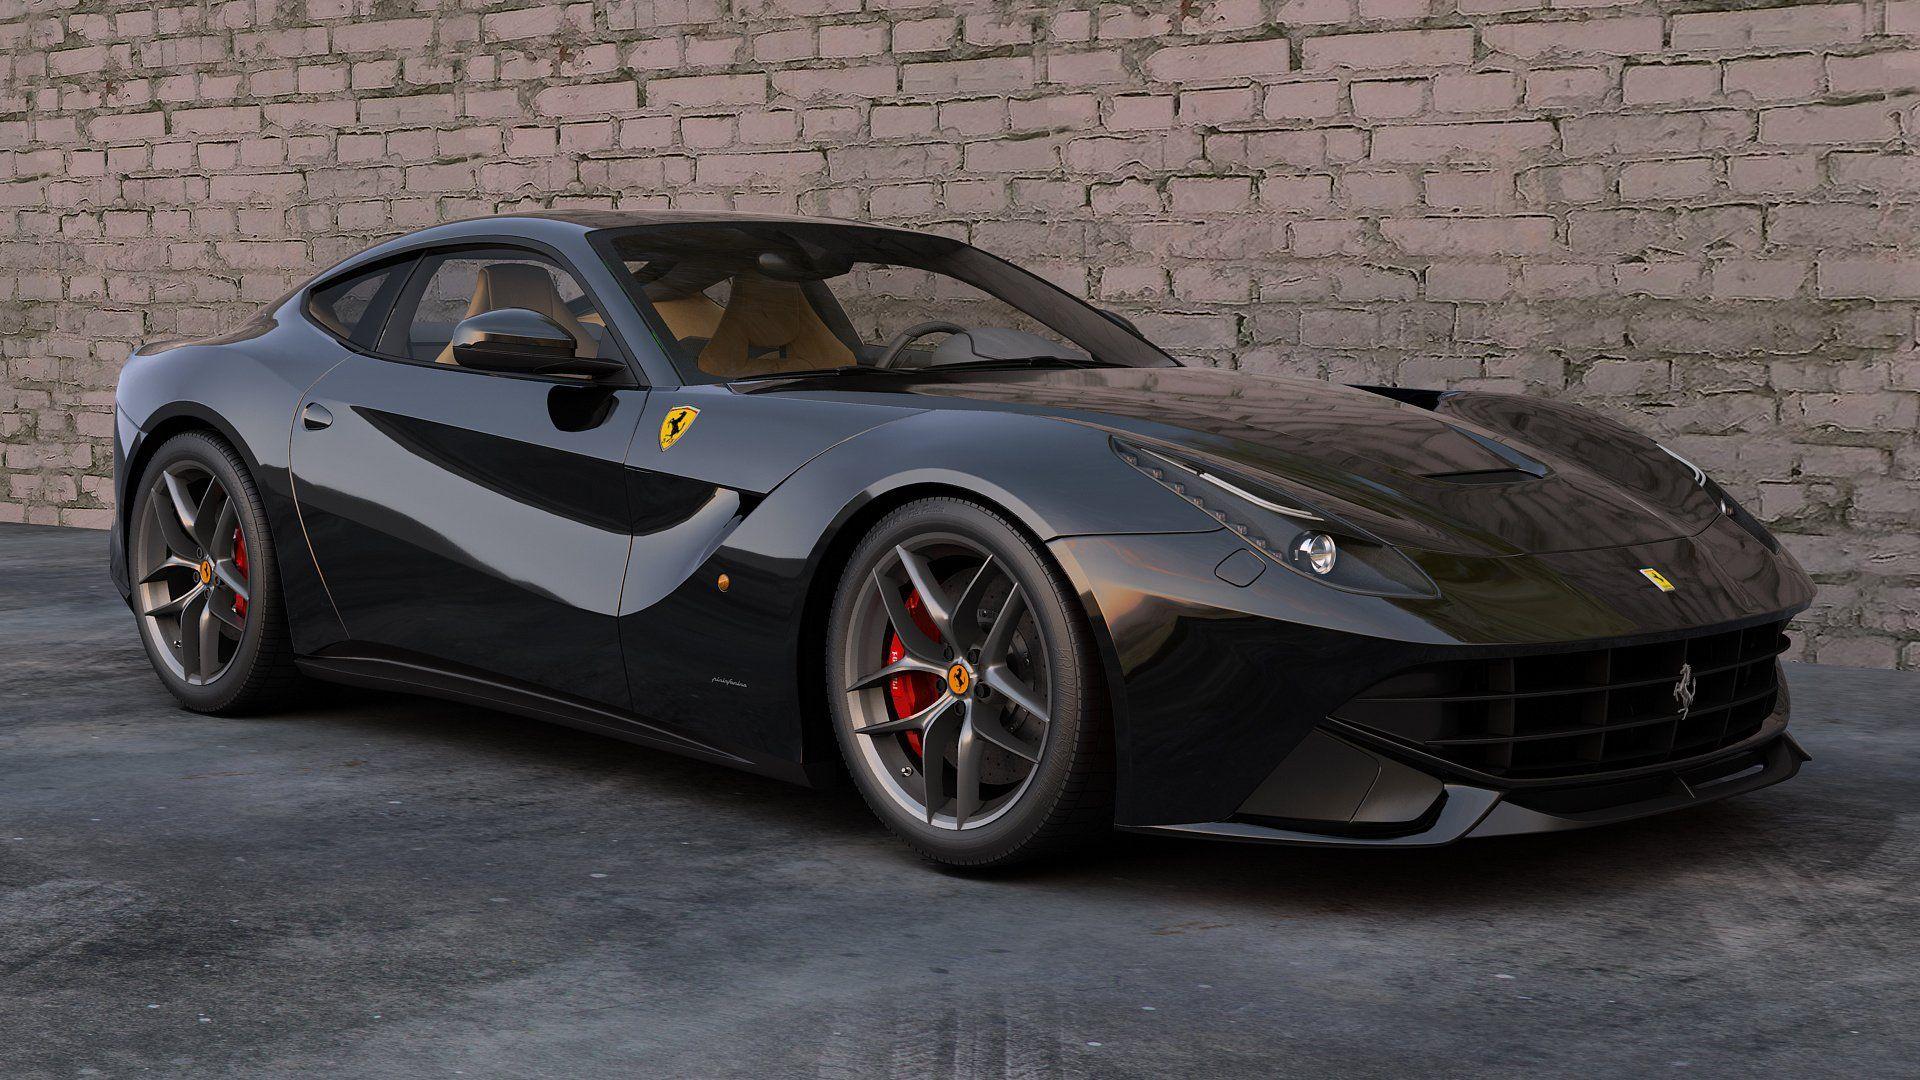 Ferrari F12berlinetta Full HD Wallpaper and Backgroundx1080